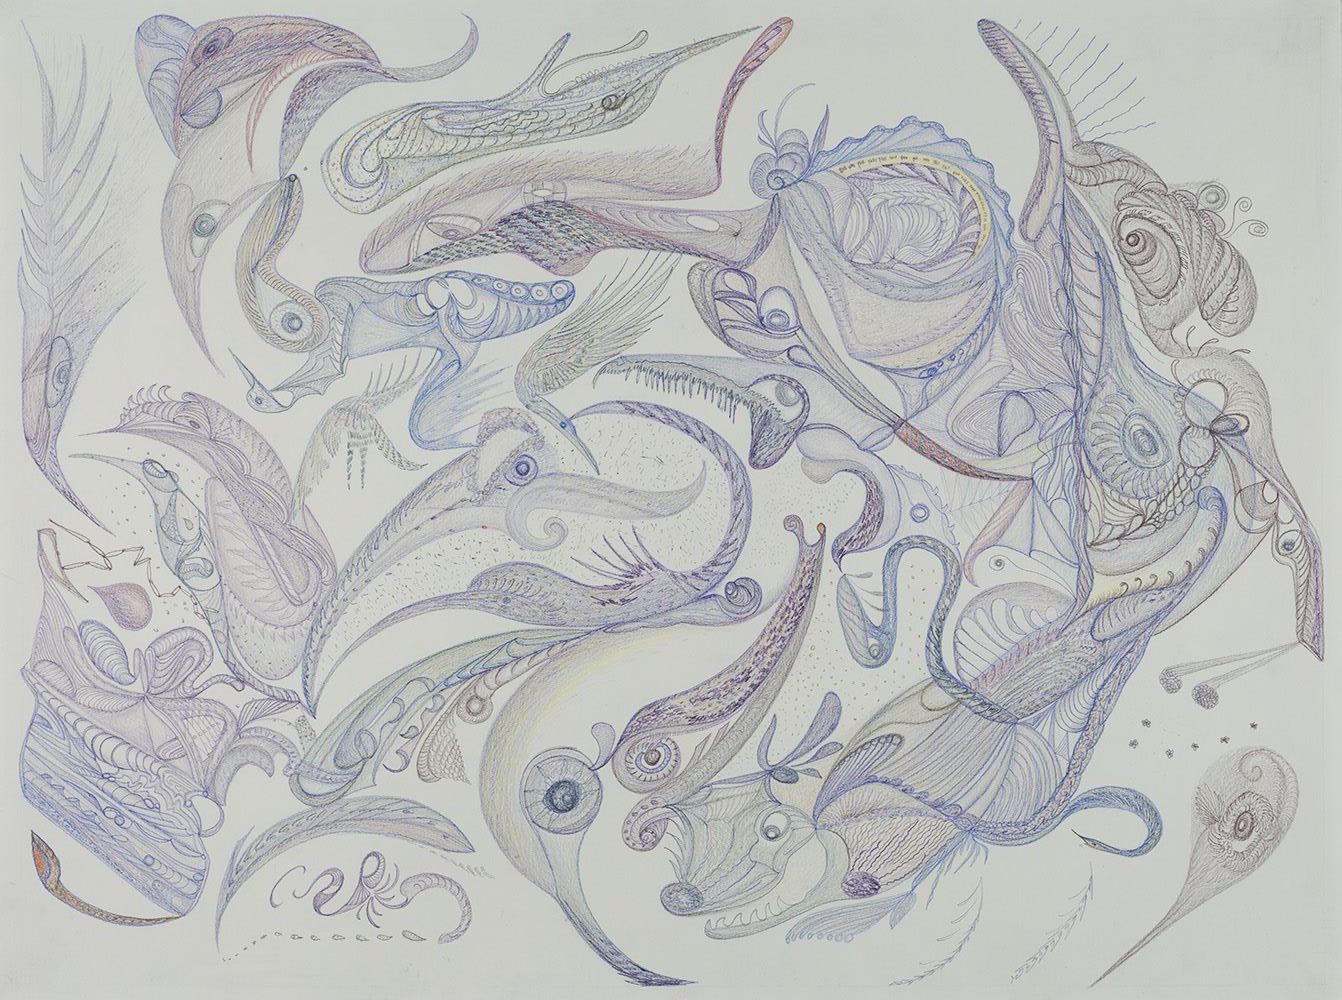   Zinnia Nishikawa    Untitled  , 2013-2015 Colored pencil on paper 18 x 24 inches 45.7 x 61 cm ZNi 1 